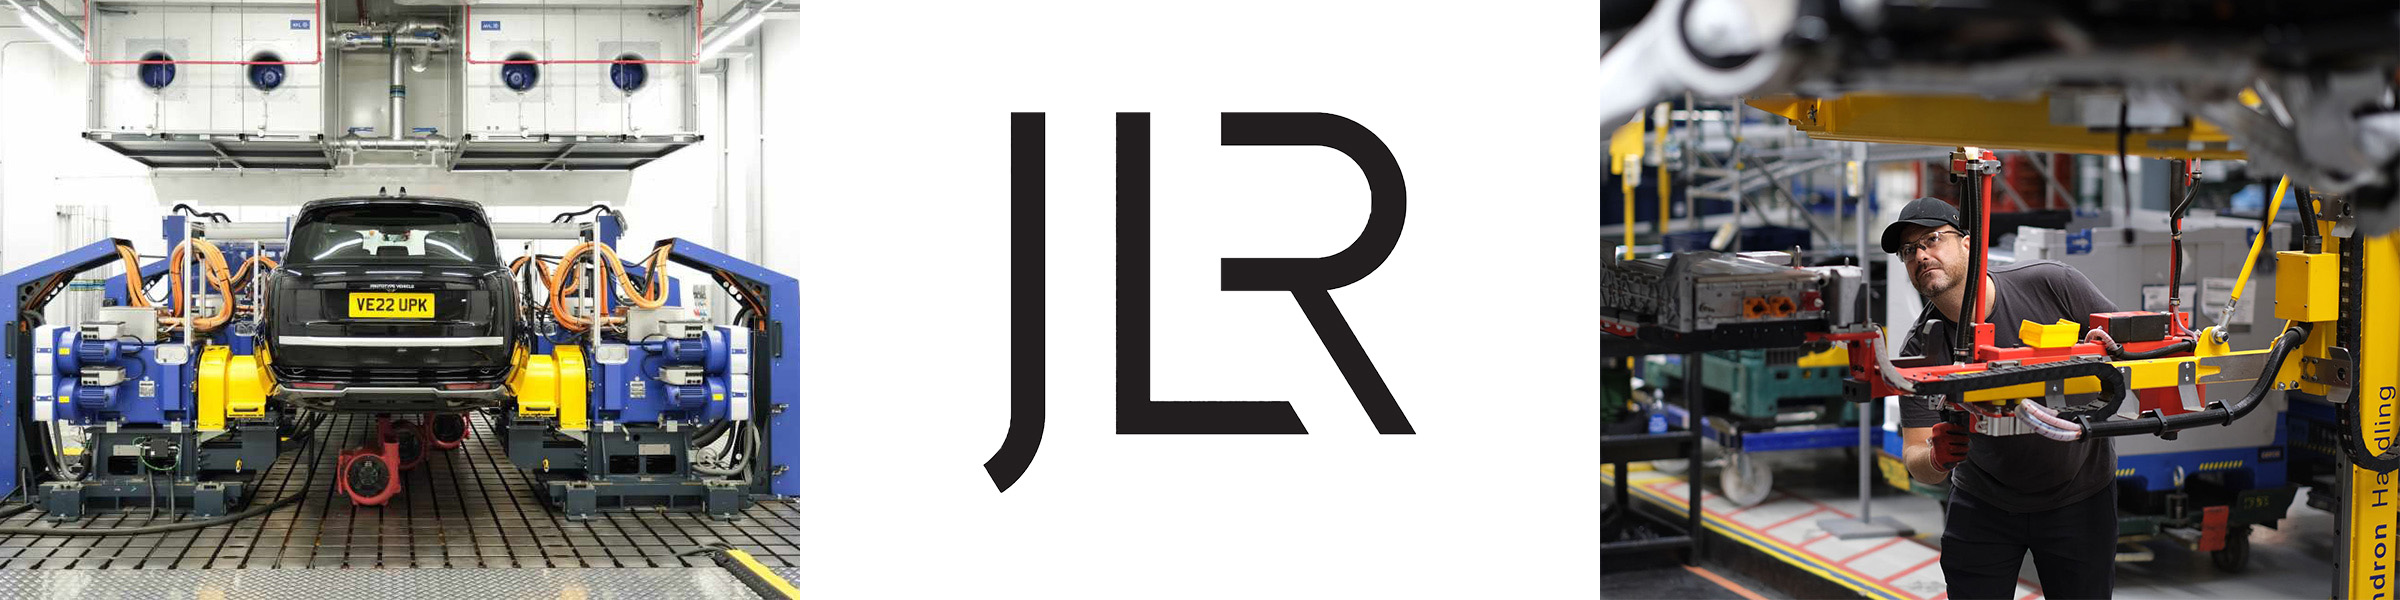 JLR EV testing facility investment